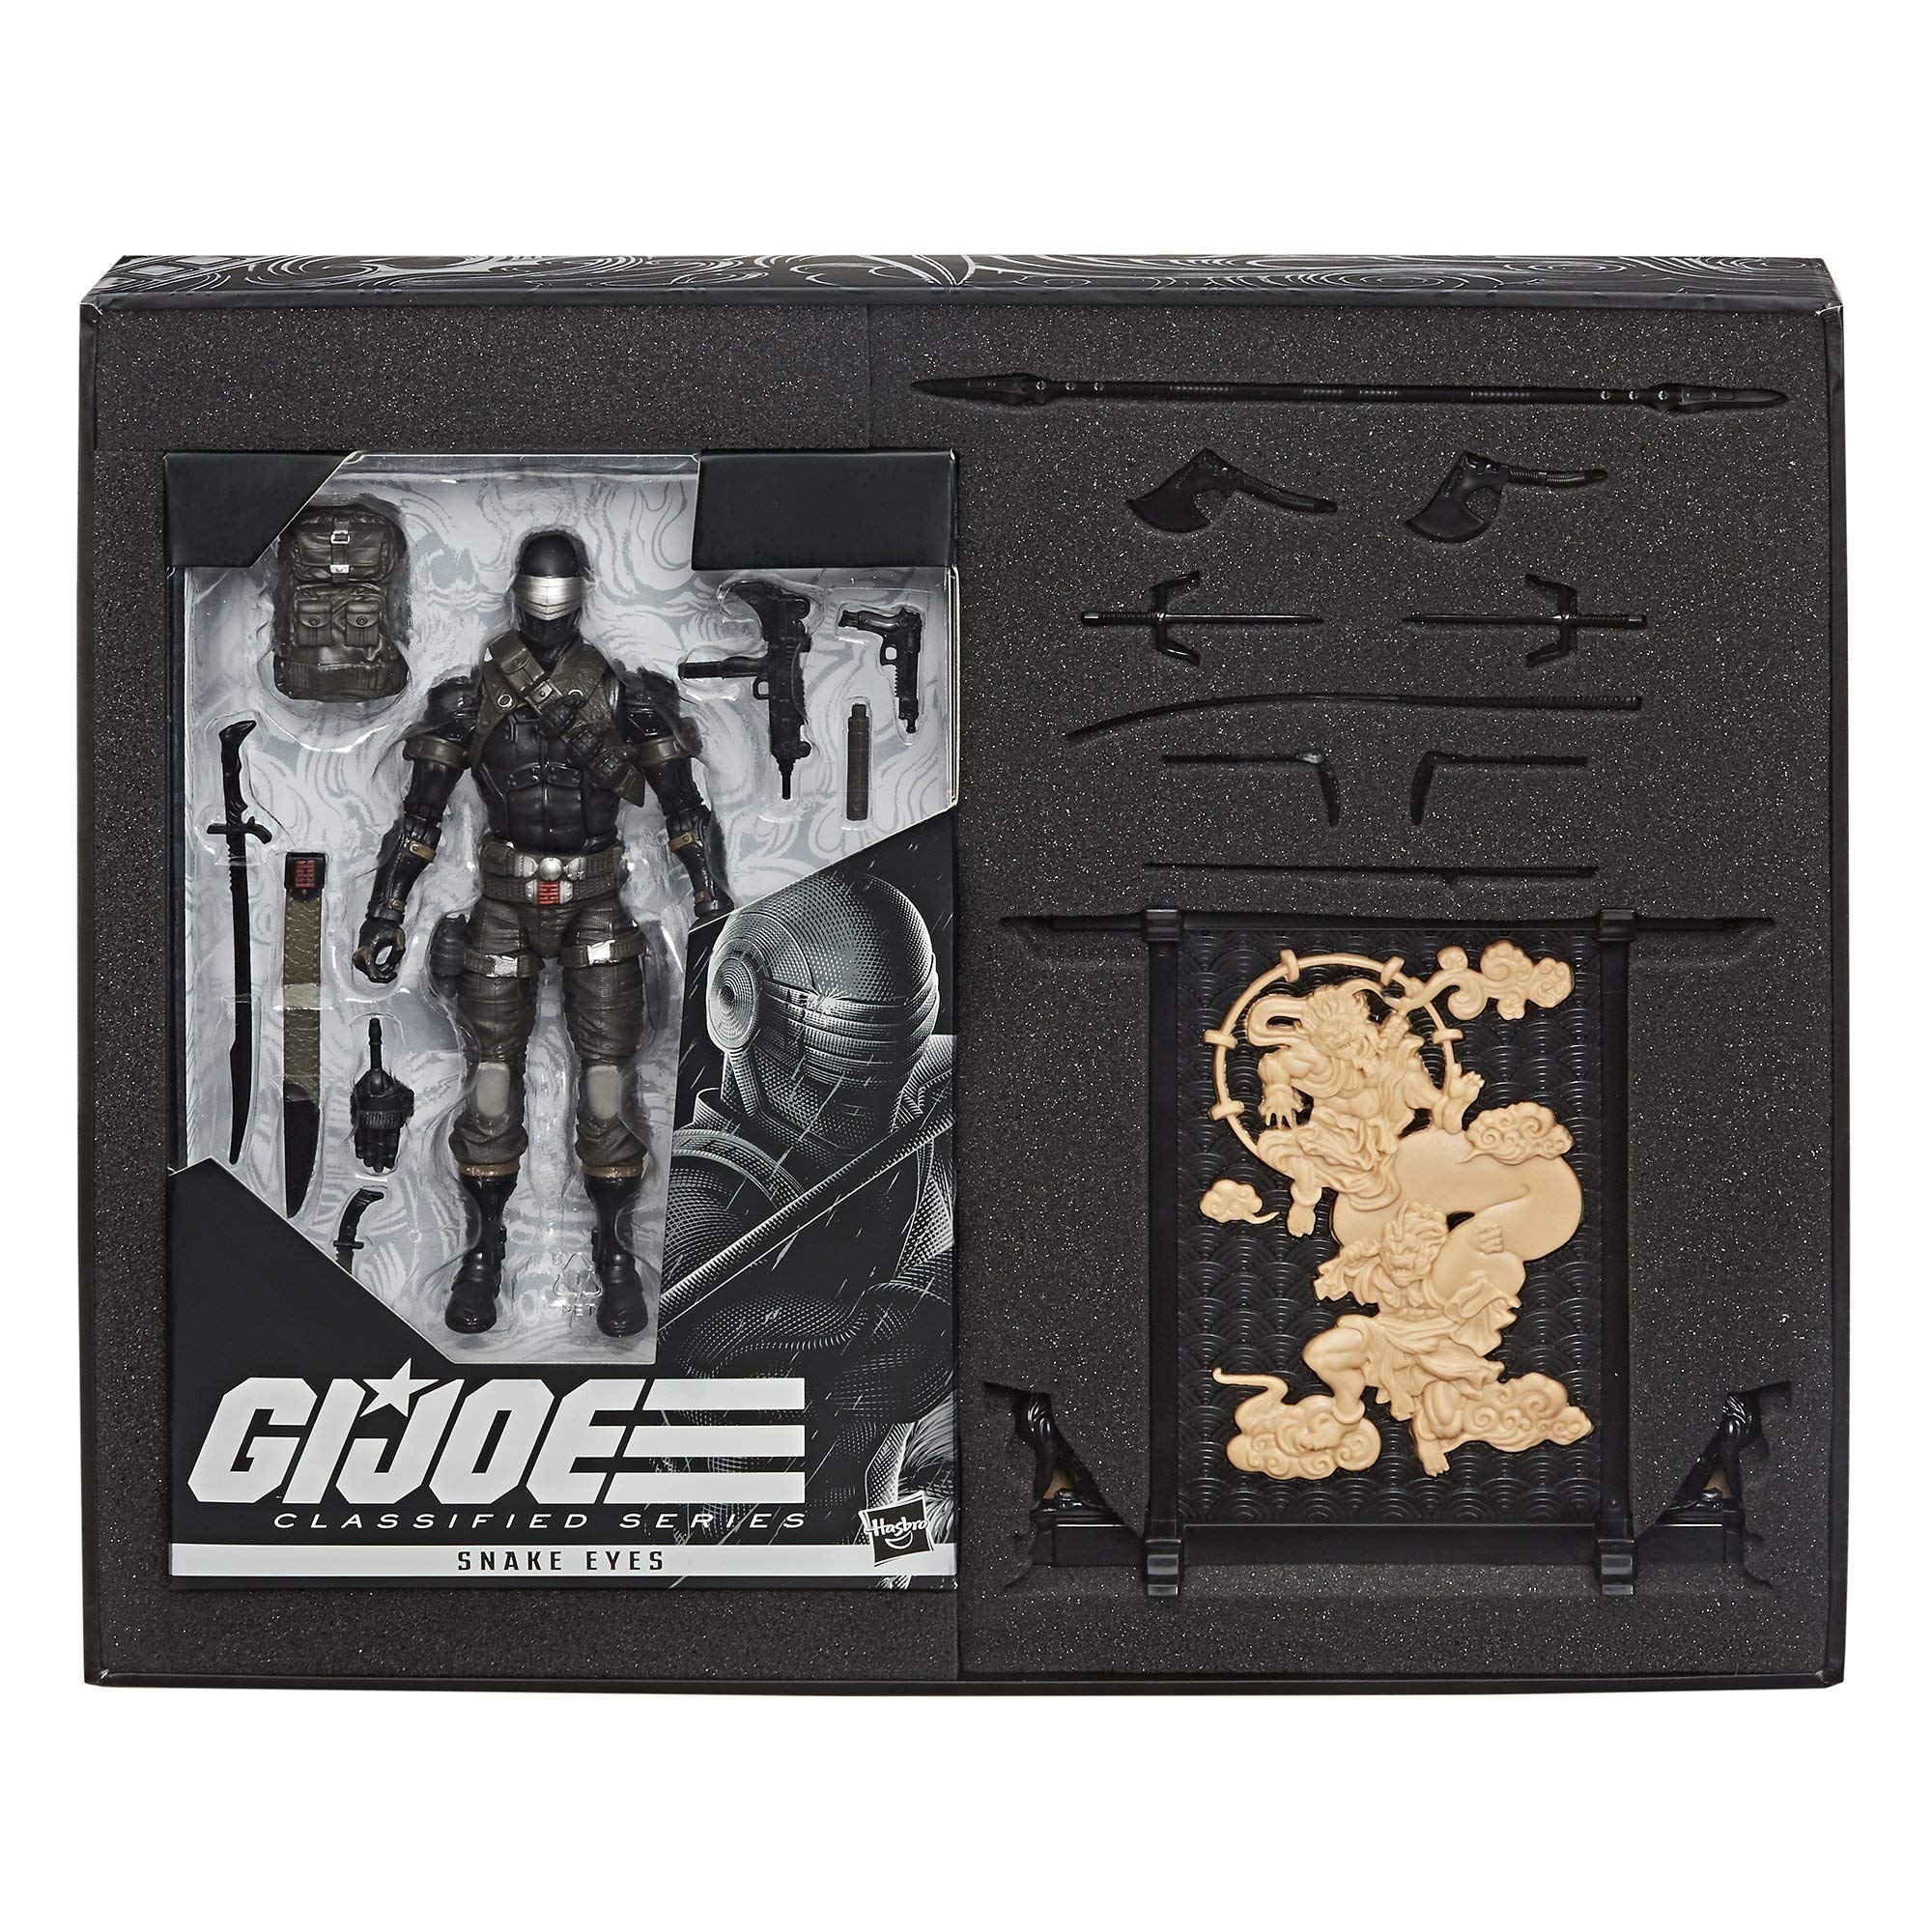 Hasbro G.I. Joe Classifiedシリーズ スネークアイズ デラックス 6インチ 限定アクションフィギュア